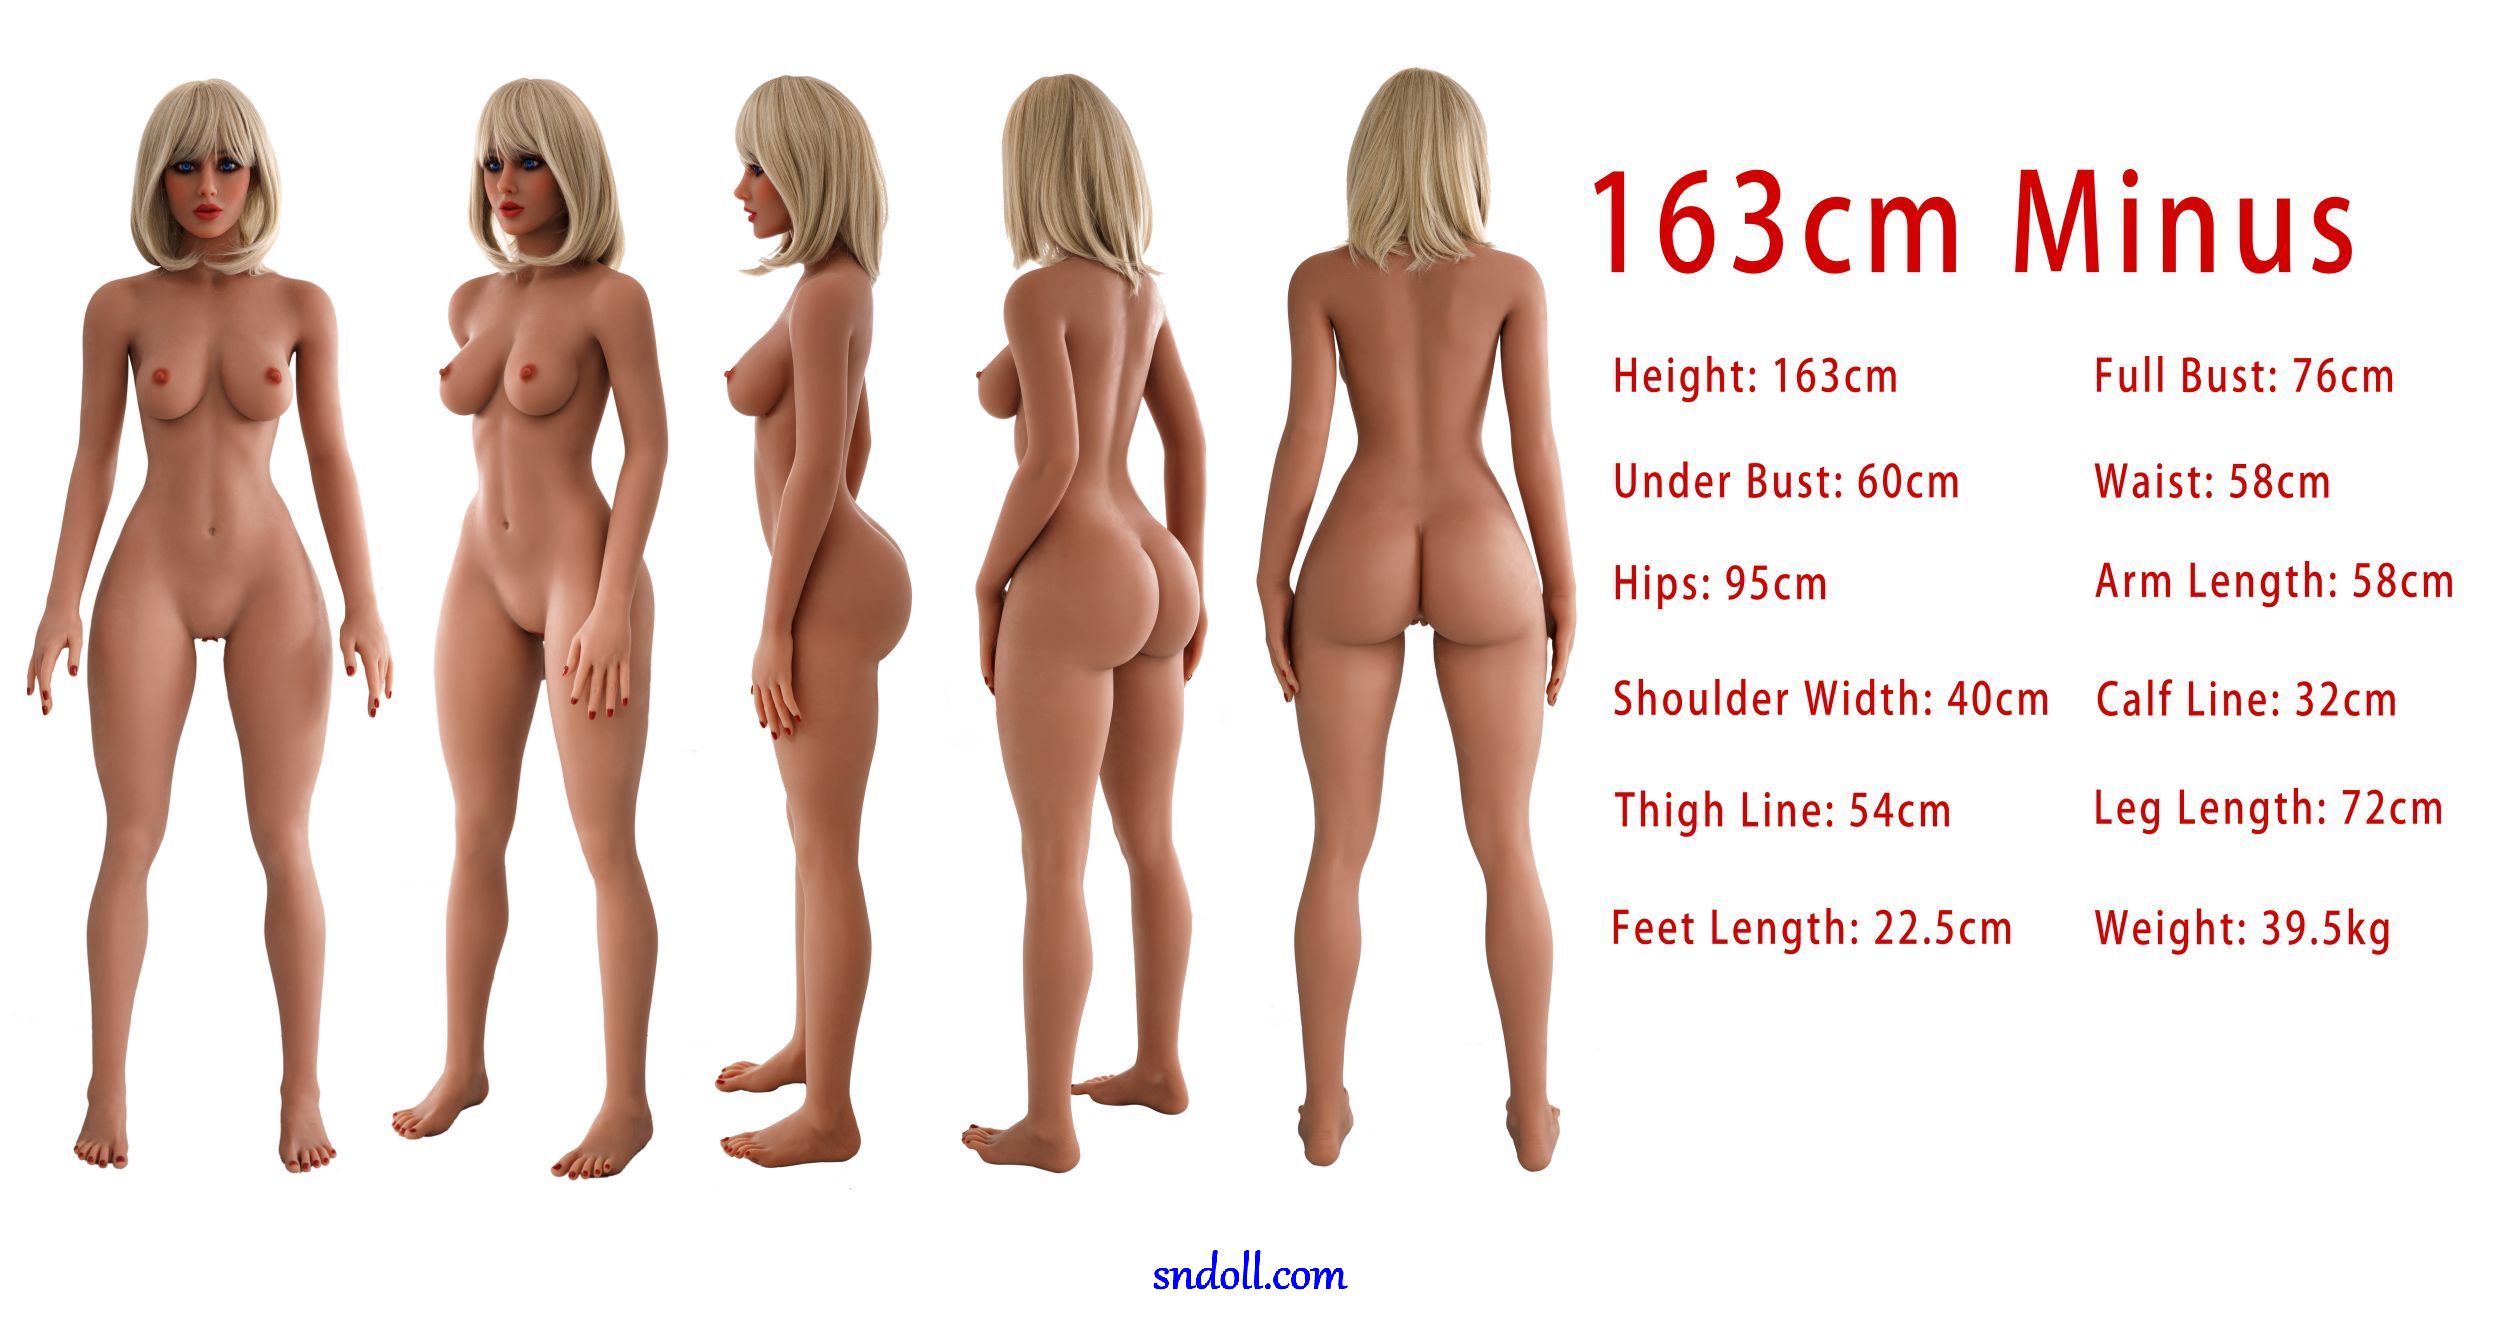 guide-irontech-tpe-body-163cm-minus